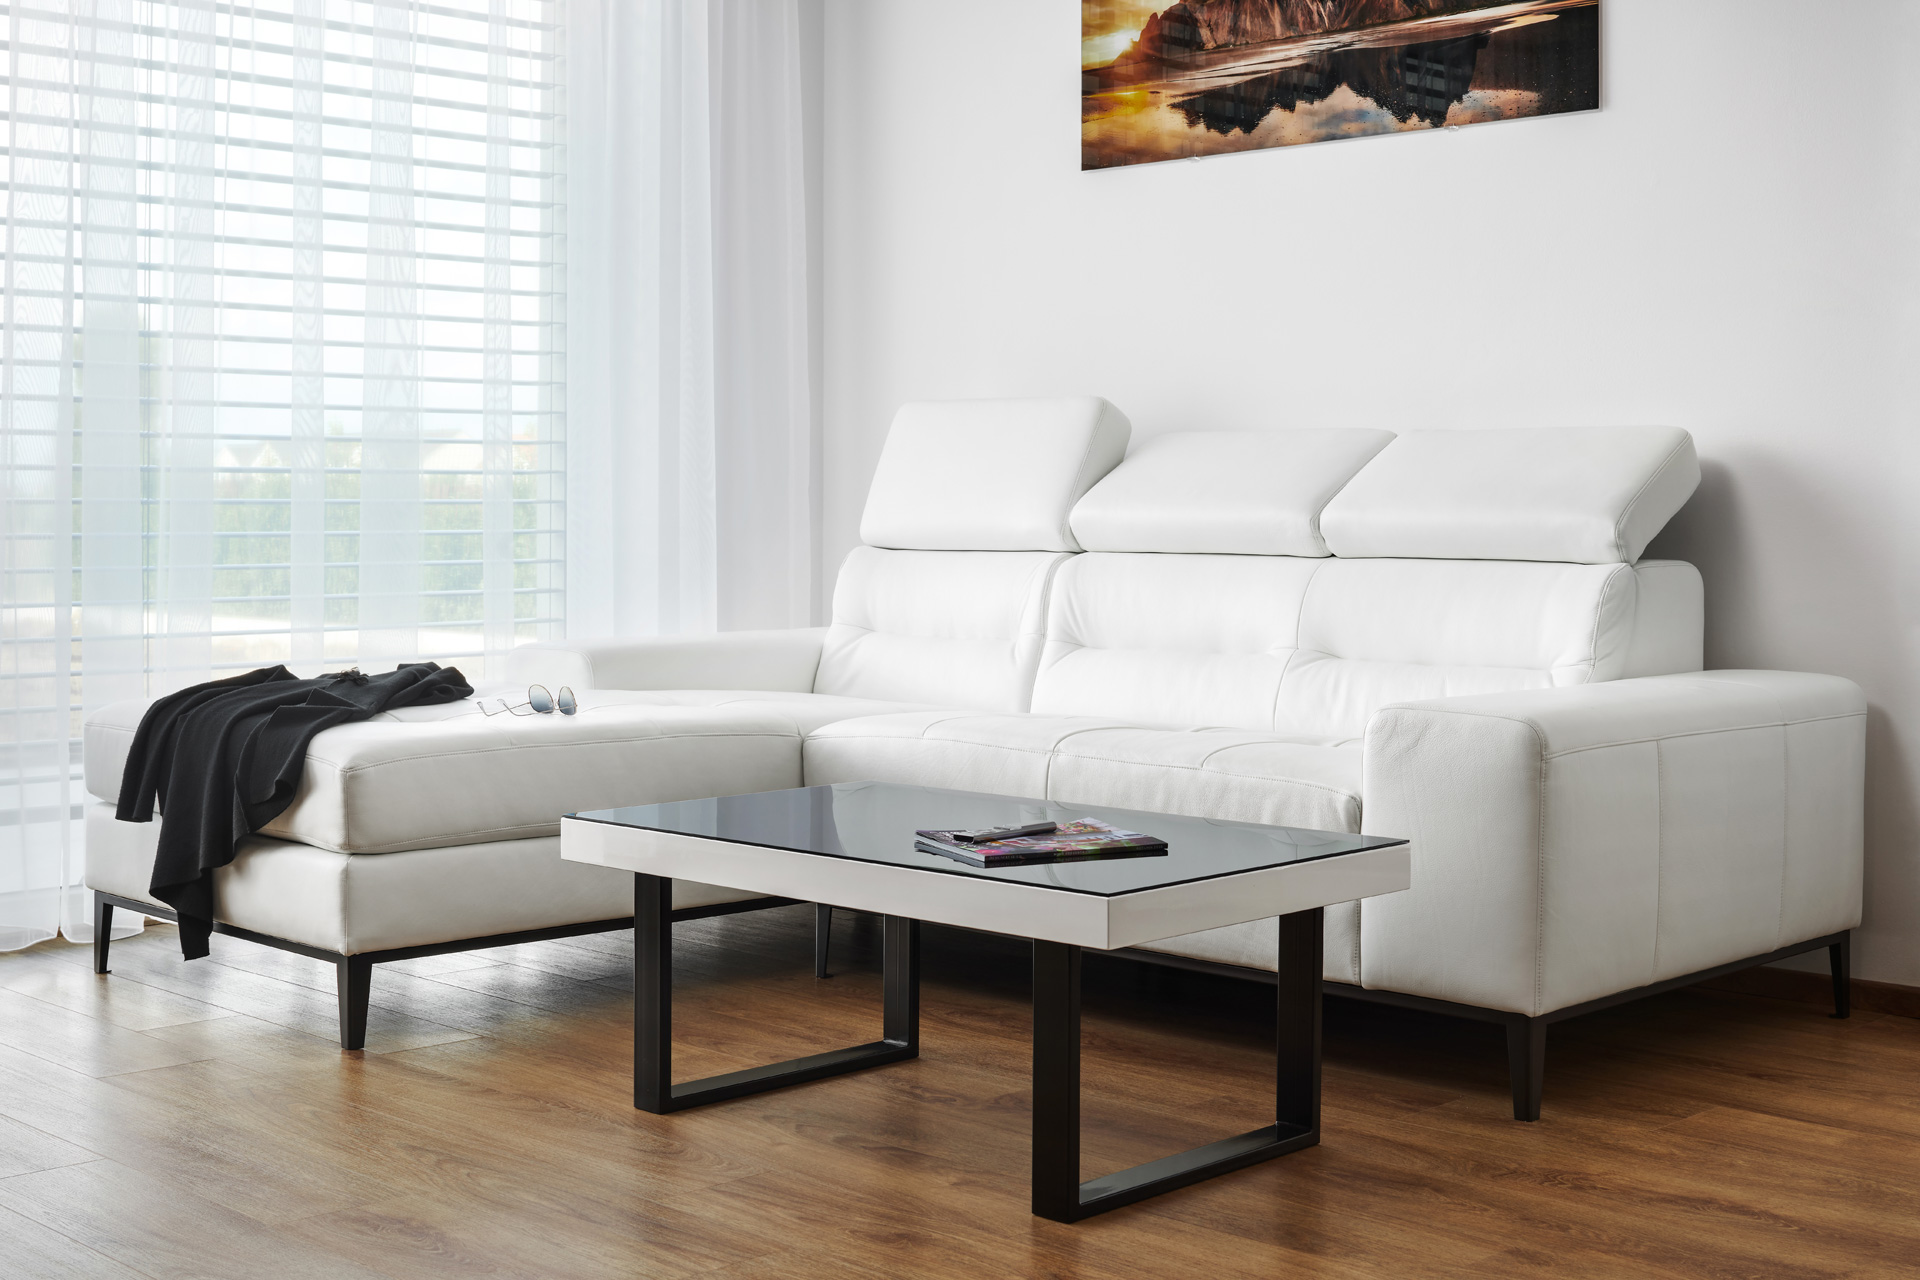 Hanák Furniture Black and white combination